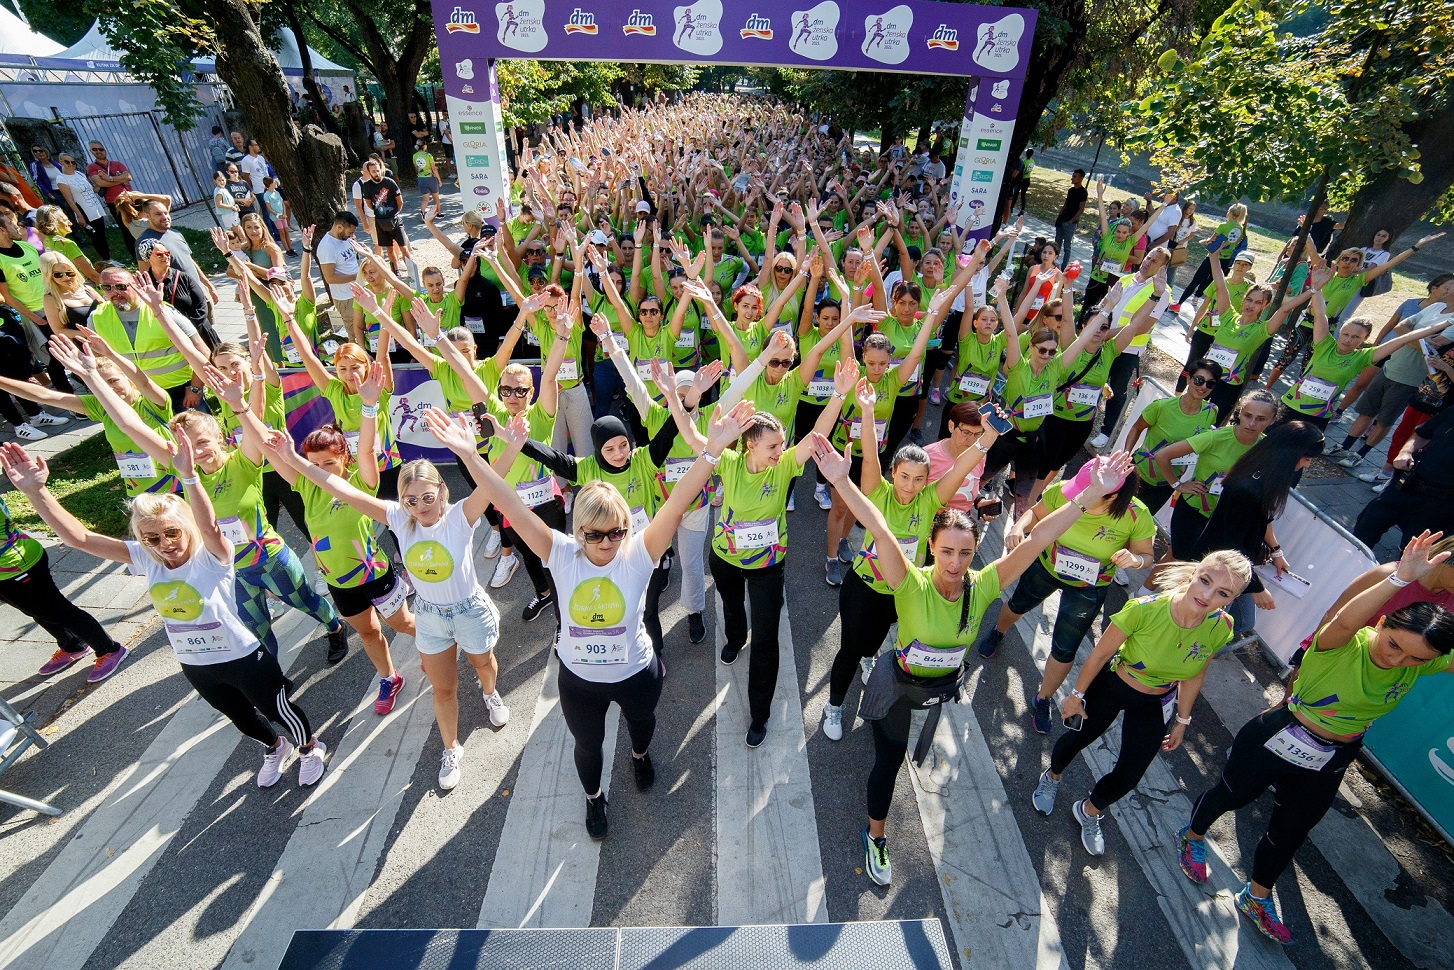 Održana 6. dm ženska trka, trčalo blizu 3.000 učesnica